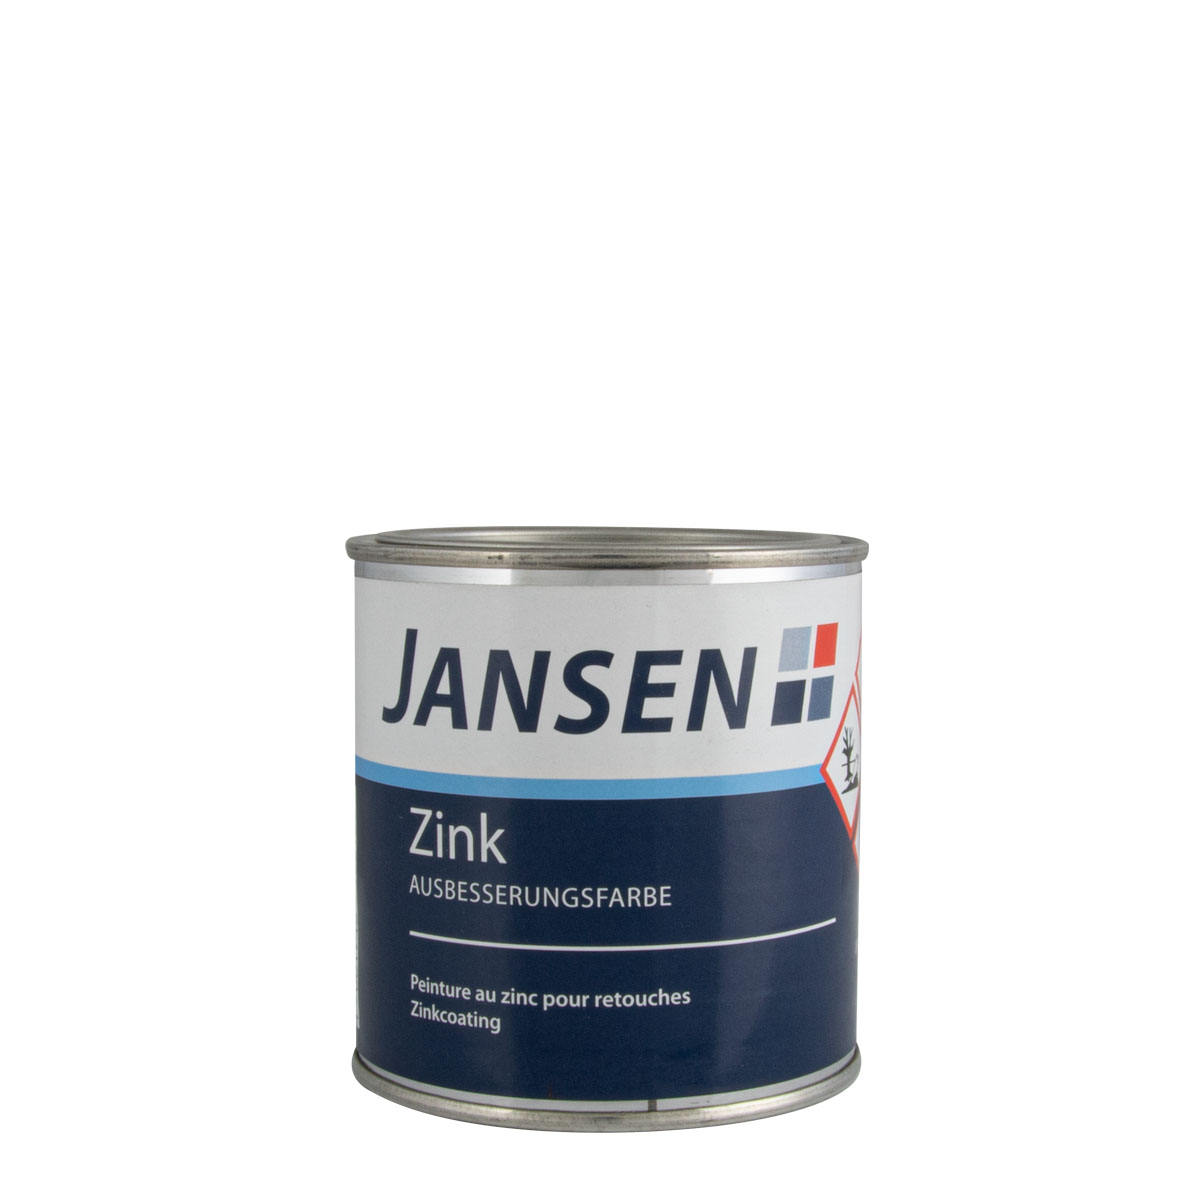 Jansen_zink_ausbesserungsfarbe_250ml_gross